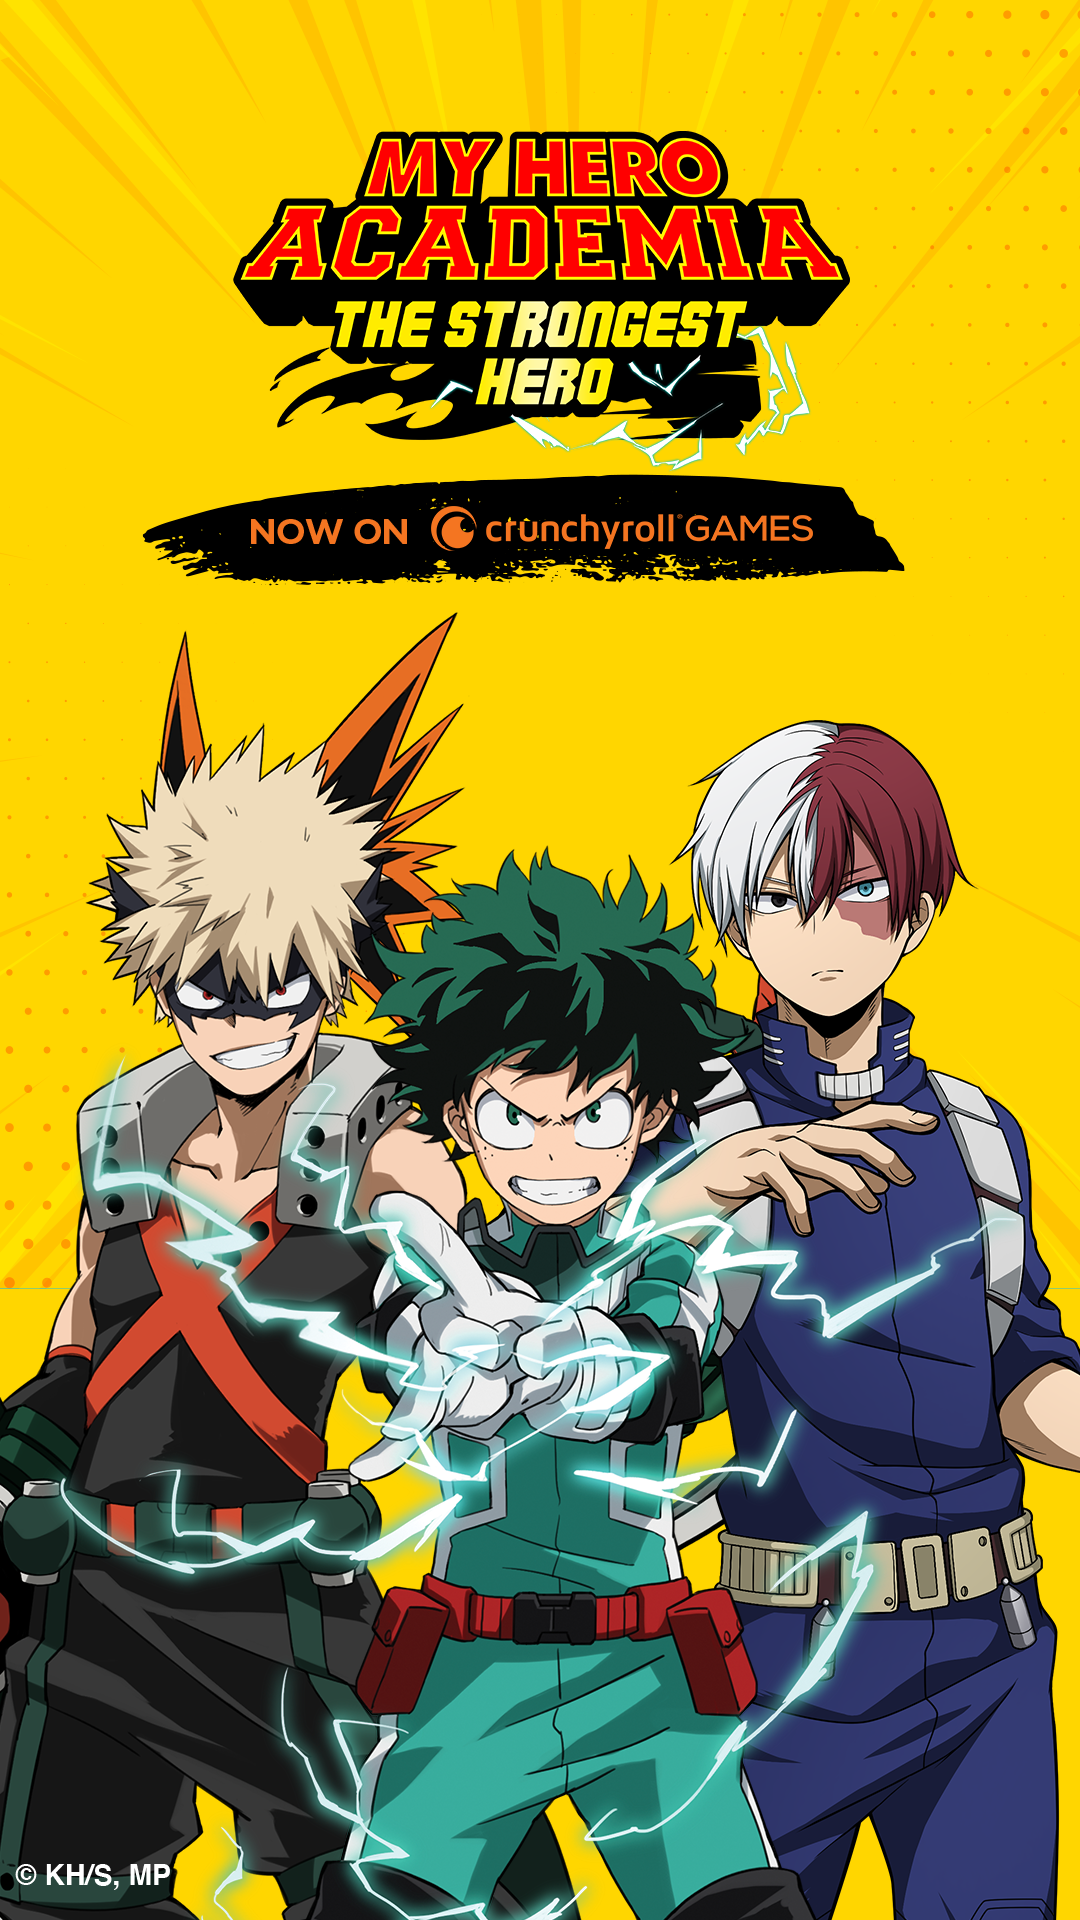 My Hero Academia: UA Heroes Battle OVA Comes to Crunchyroll